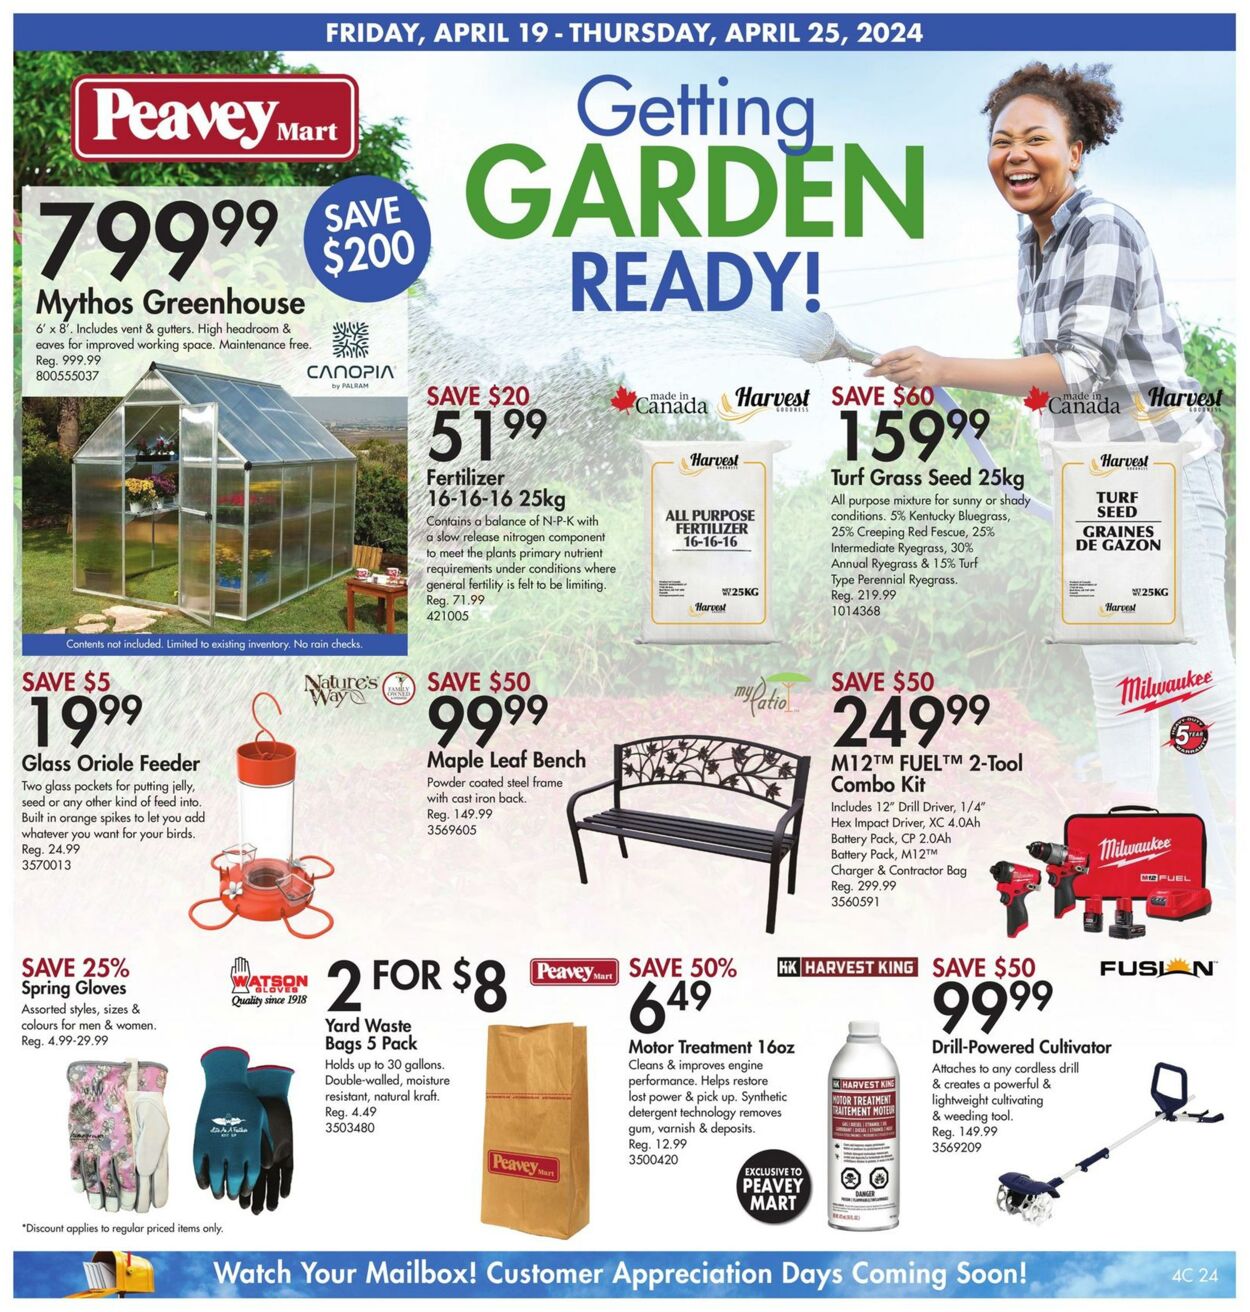 Peavey Mart Promotional flyers